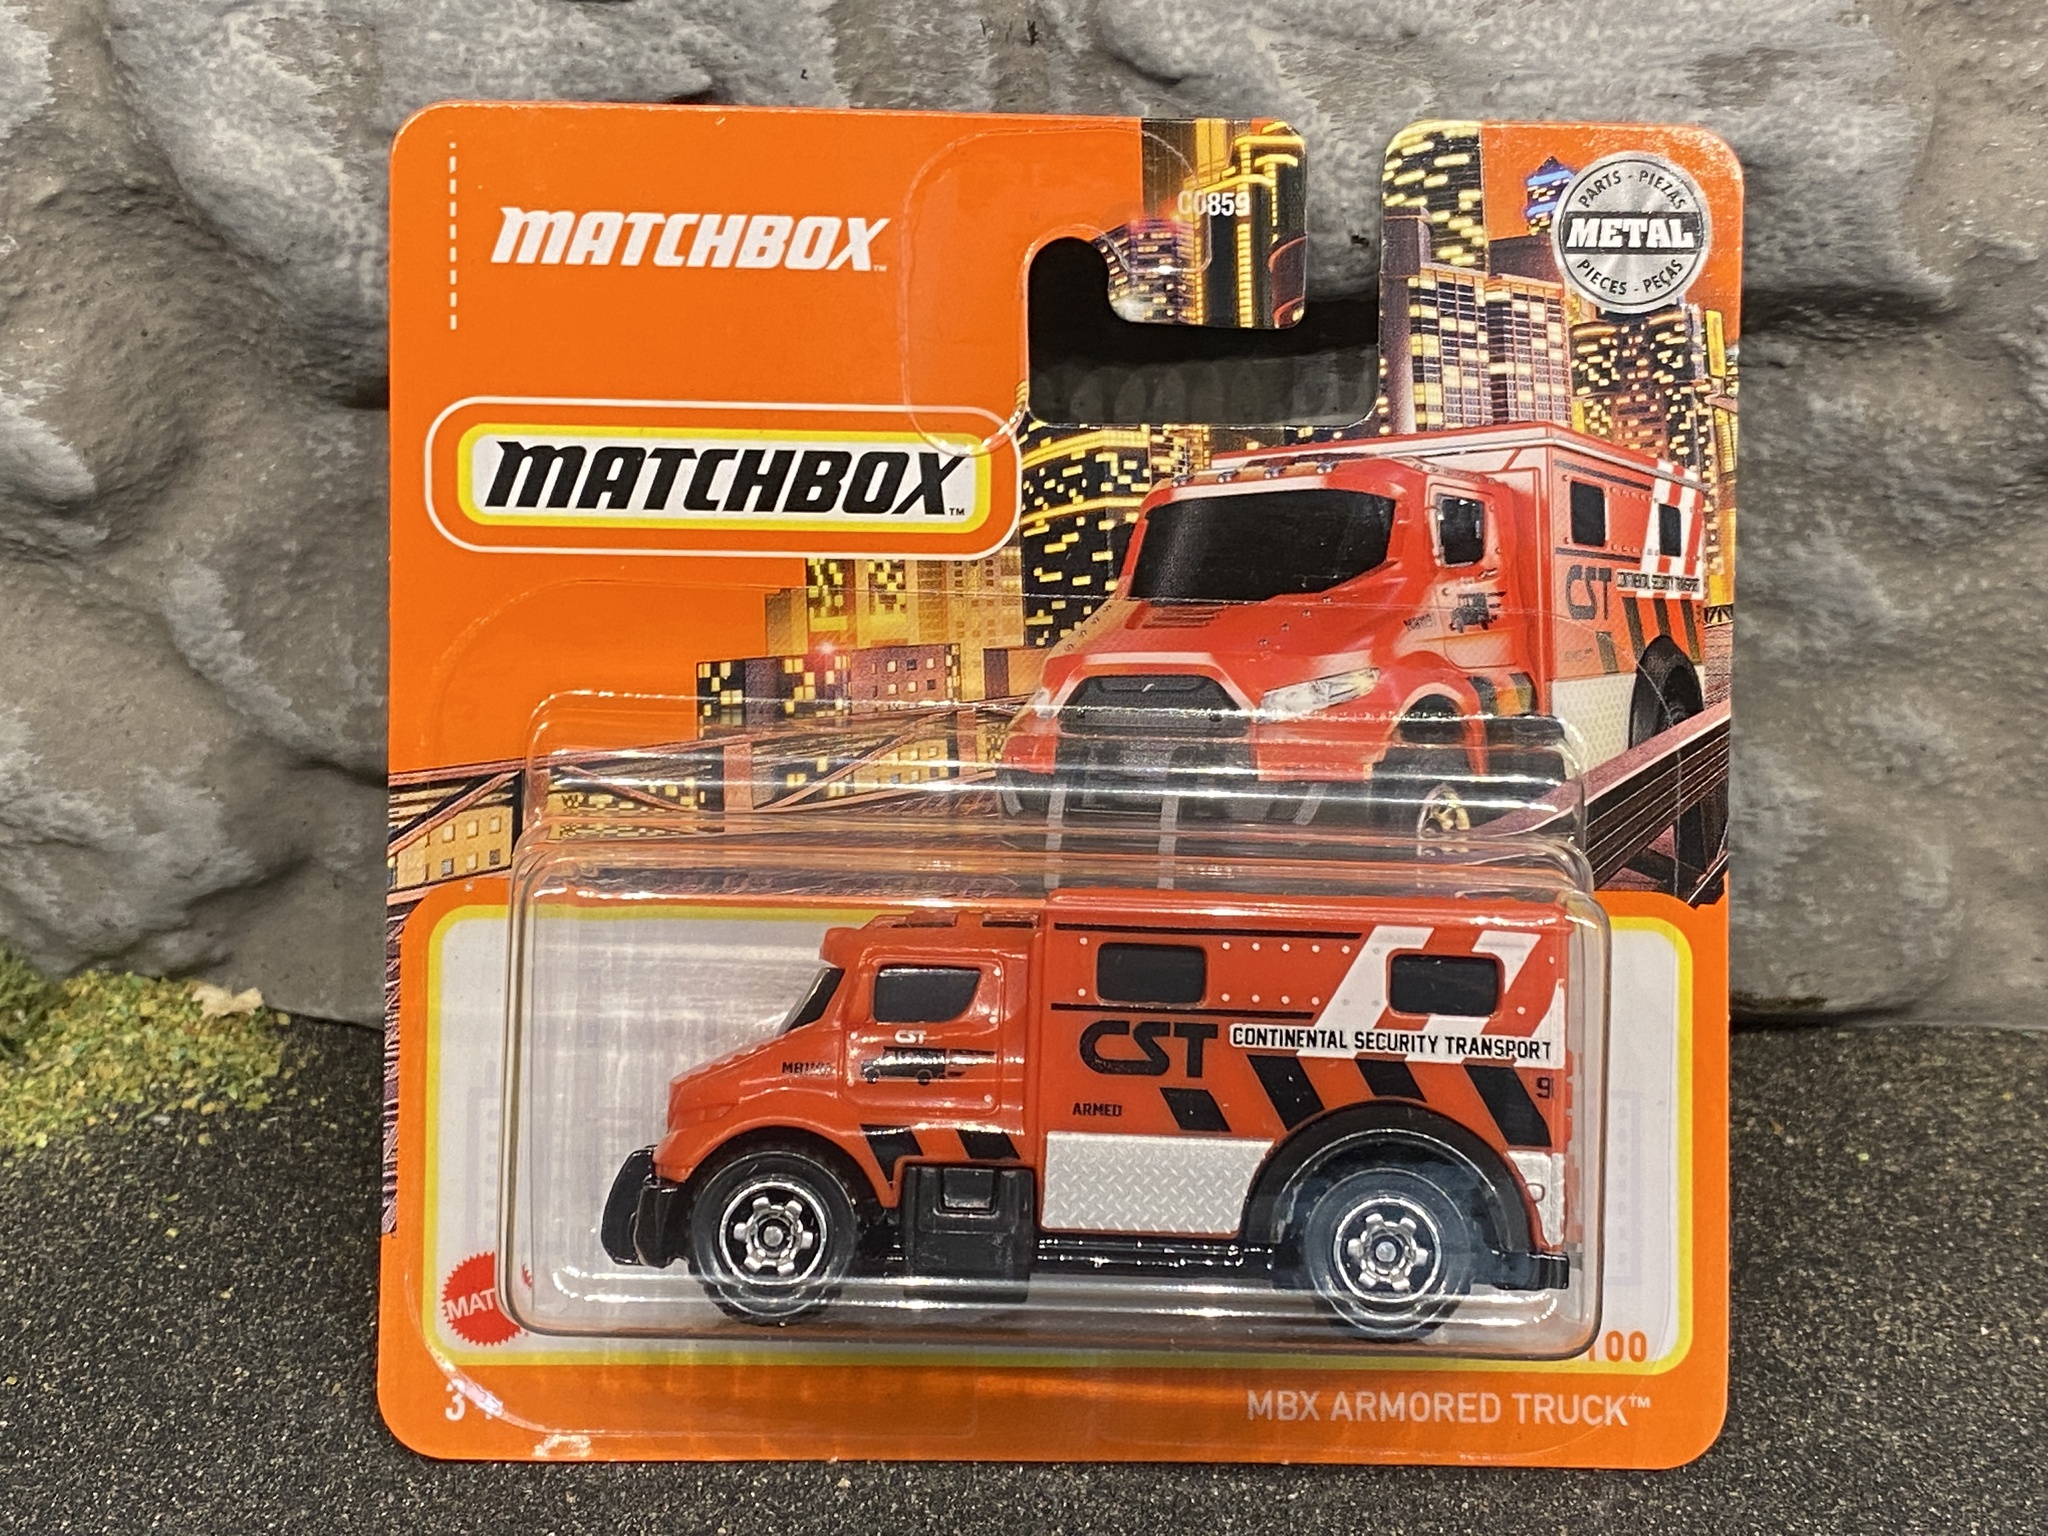 Skala 1/64 Matchbox - MBX Armored Truck  - Continental Security Transport